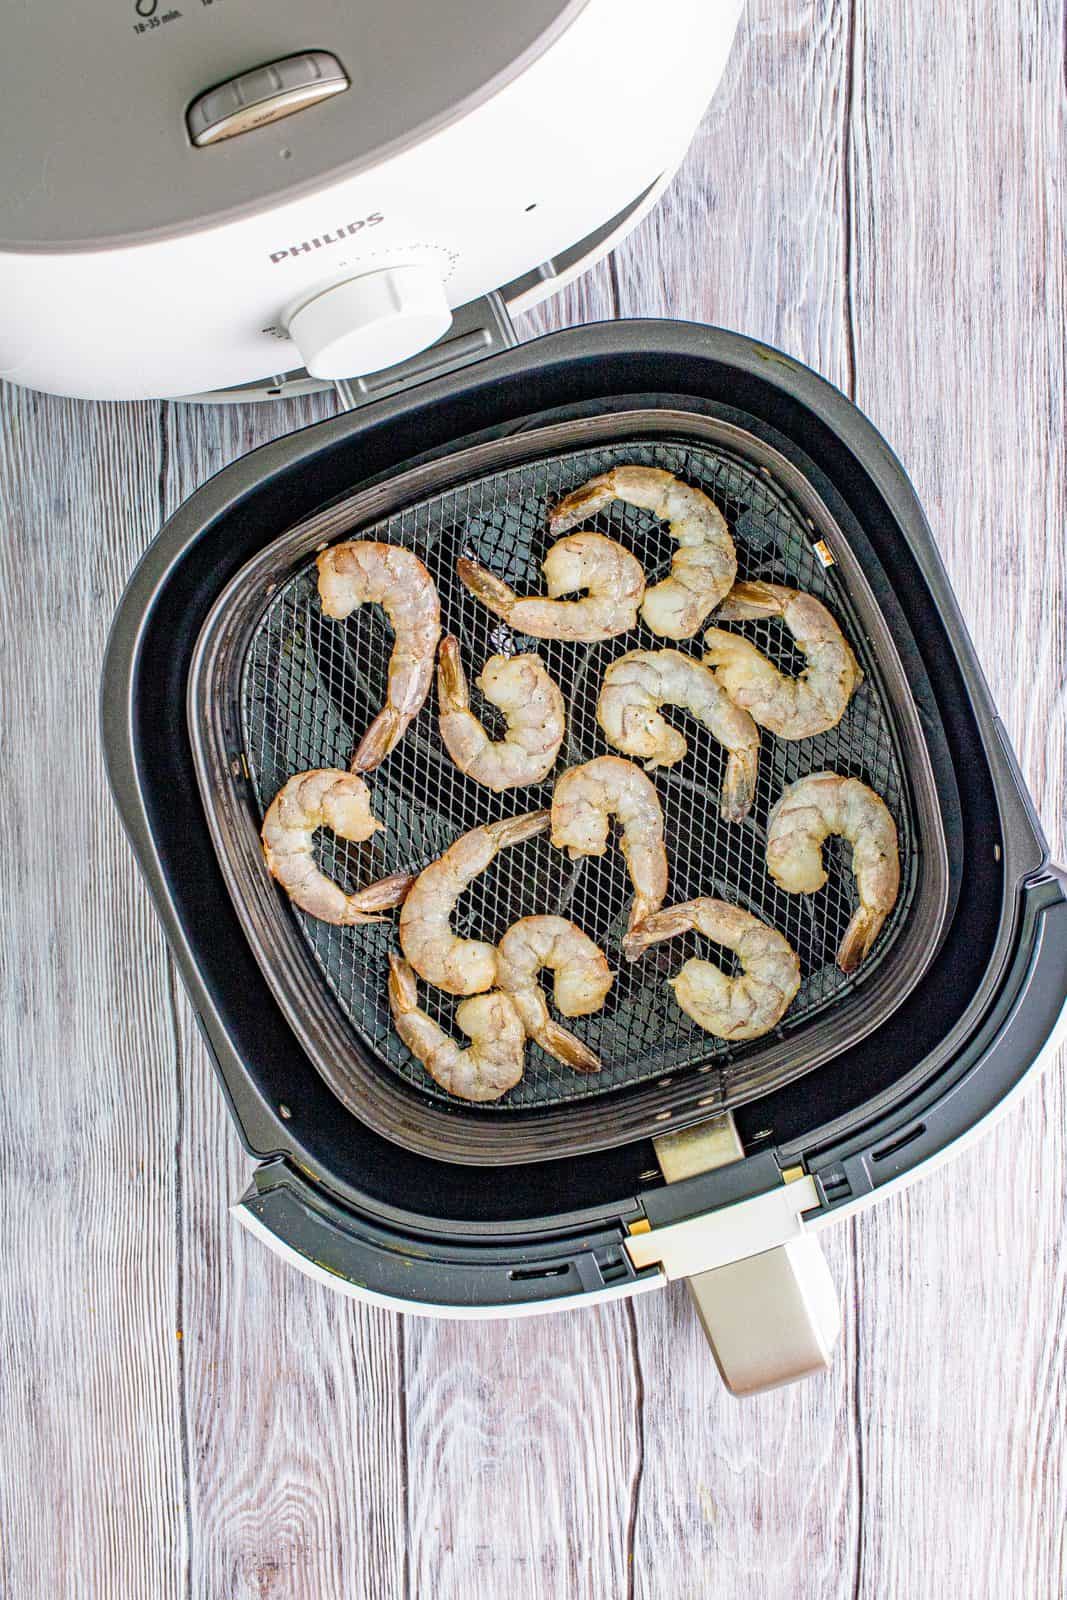 Seasoned shrimp placed into prepared air fryer basket.